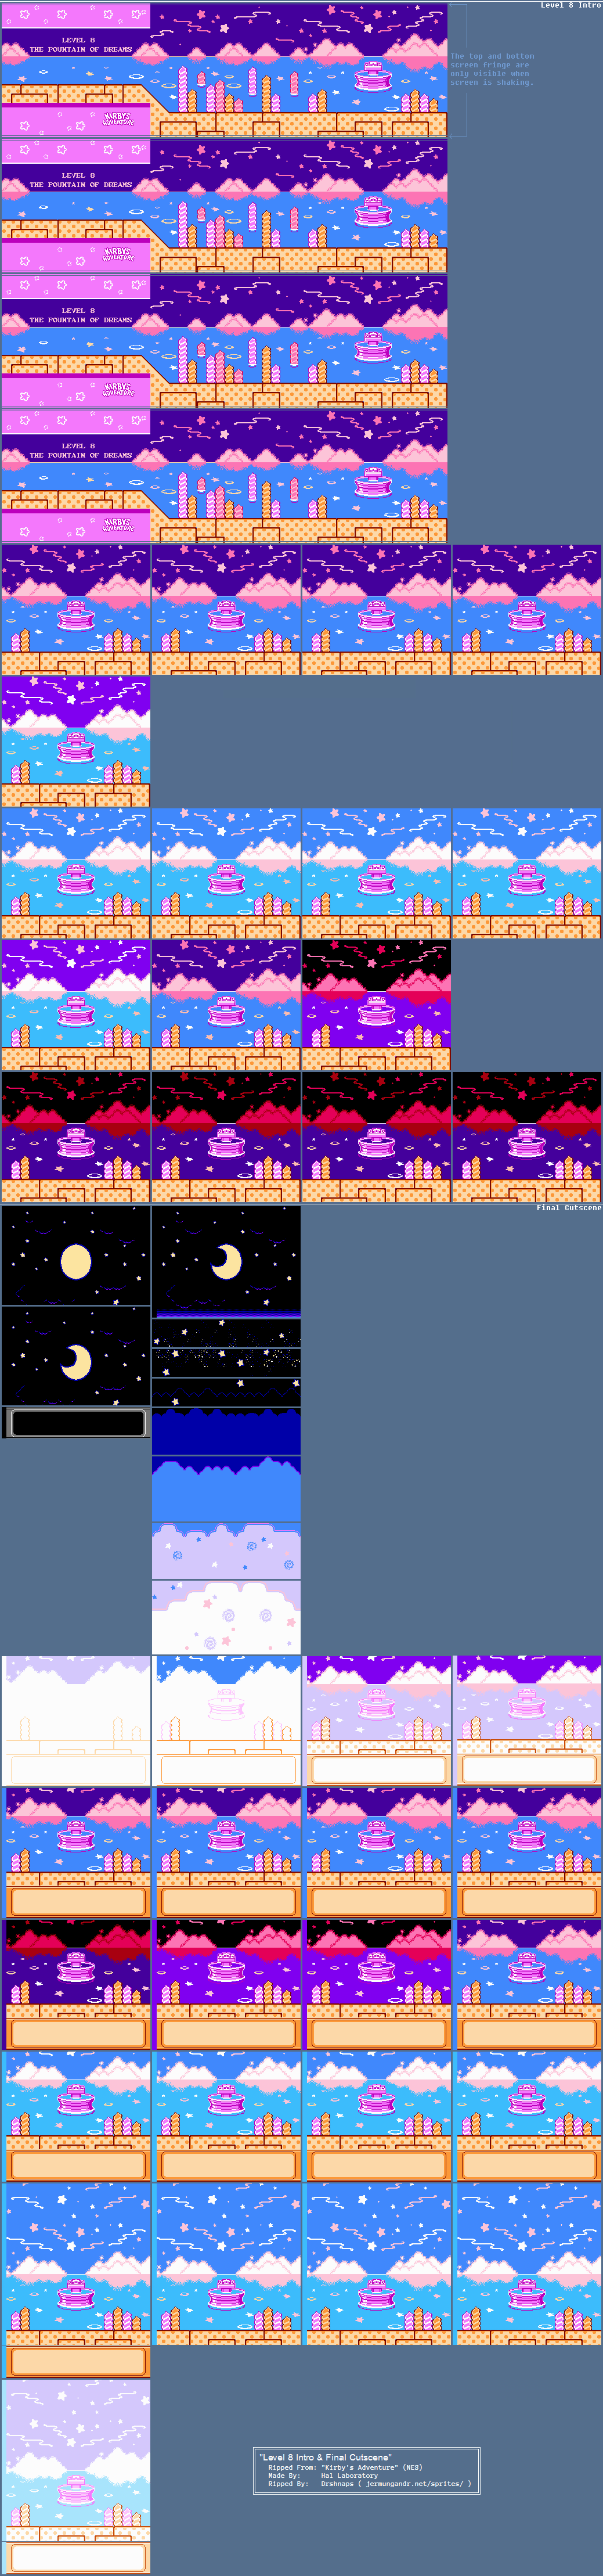 Kirby's Adventure - Cutscene Backgrounds (02 / 02)